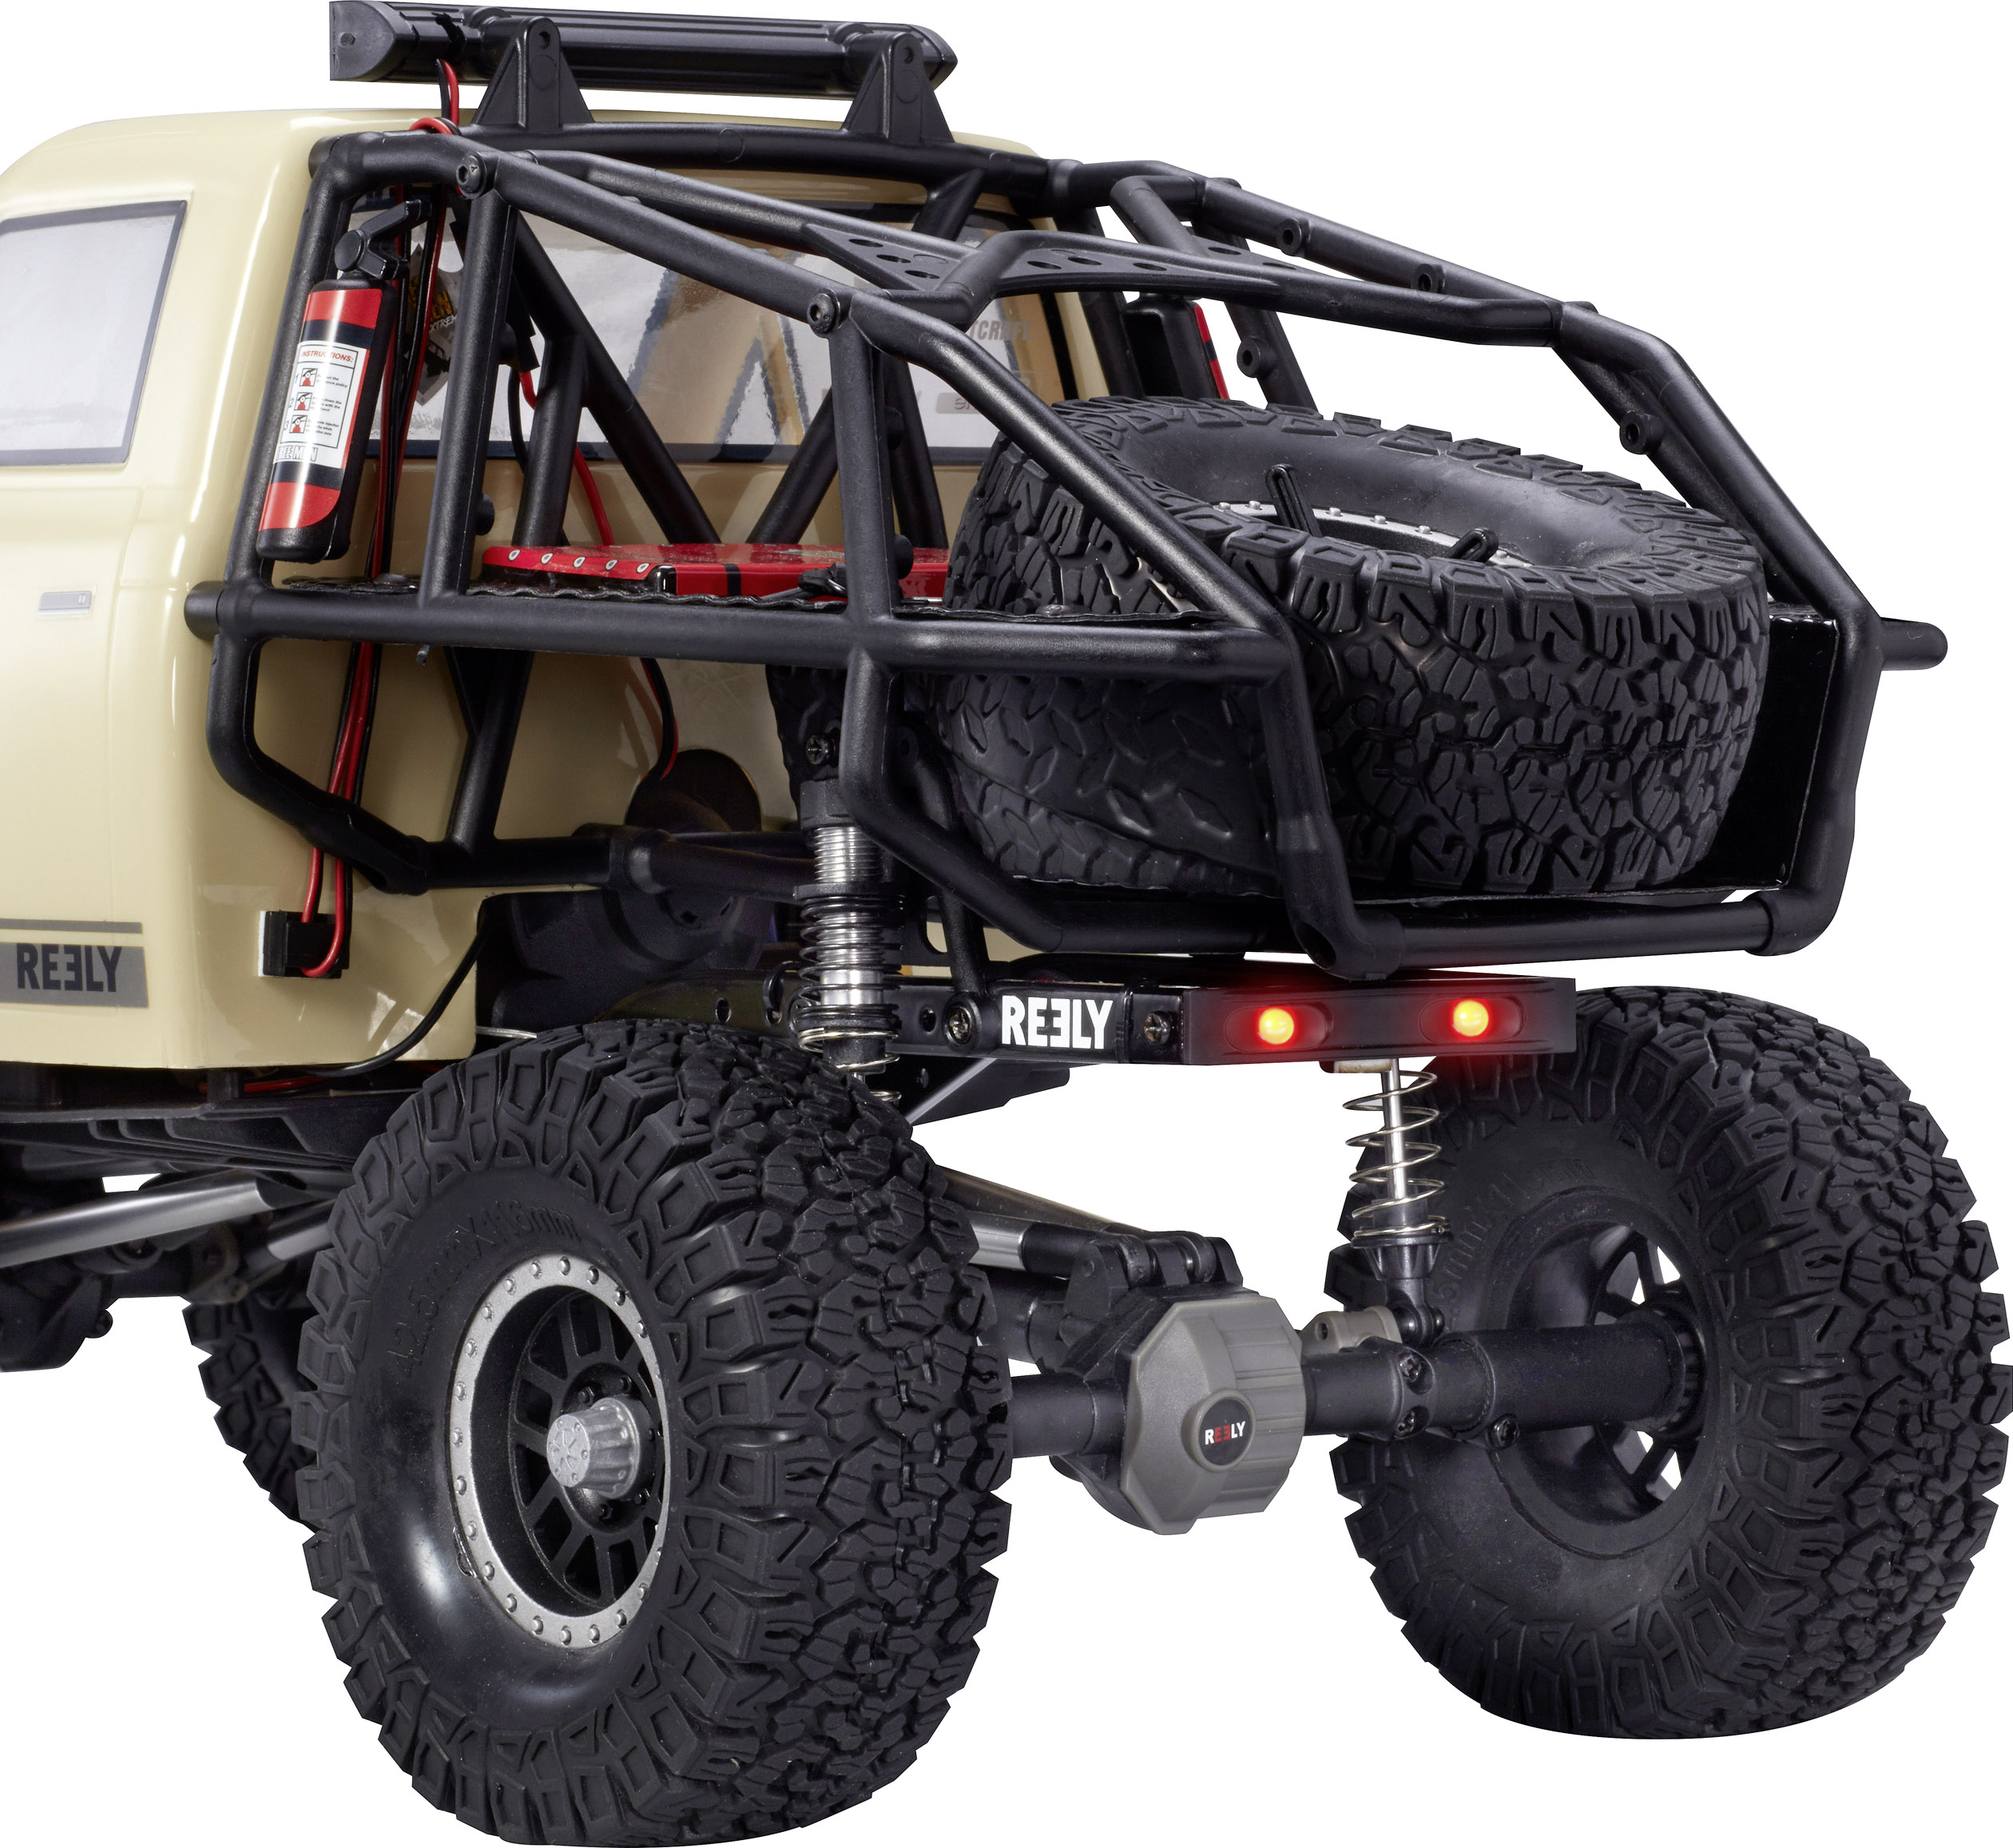 Reely Free Men Extreme Brushed 1:10 RC Modellauto Elektro Crawler Allradantrieb (4WD) 100% RtR 2,4GHz inkl. Akku, Ladegerät und